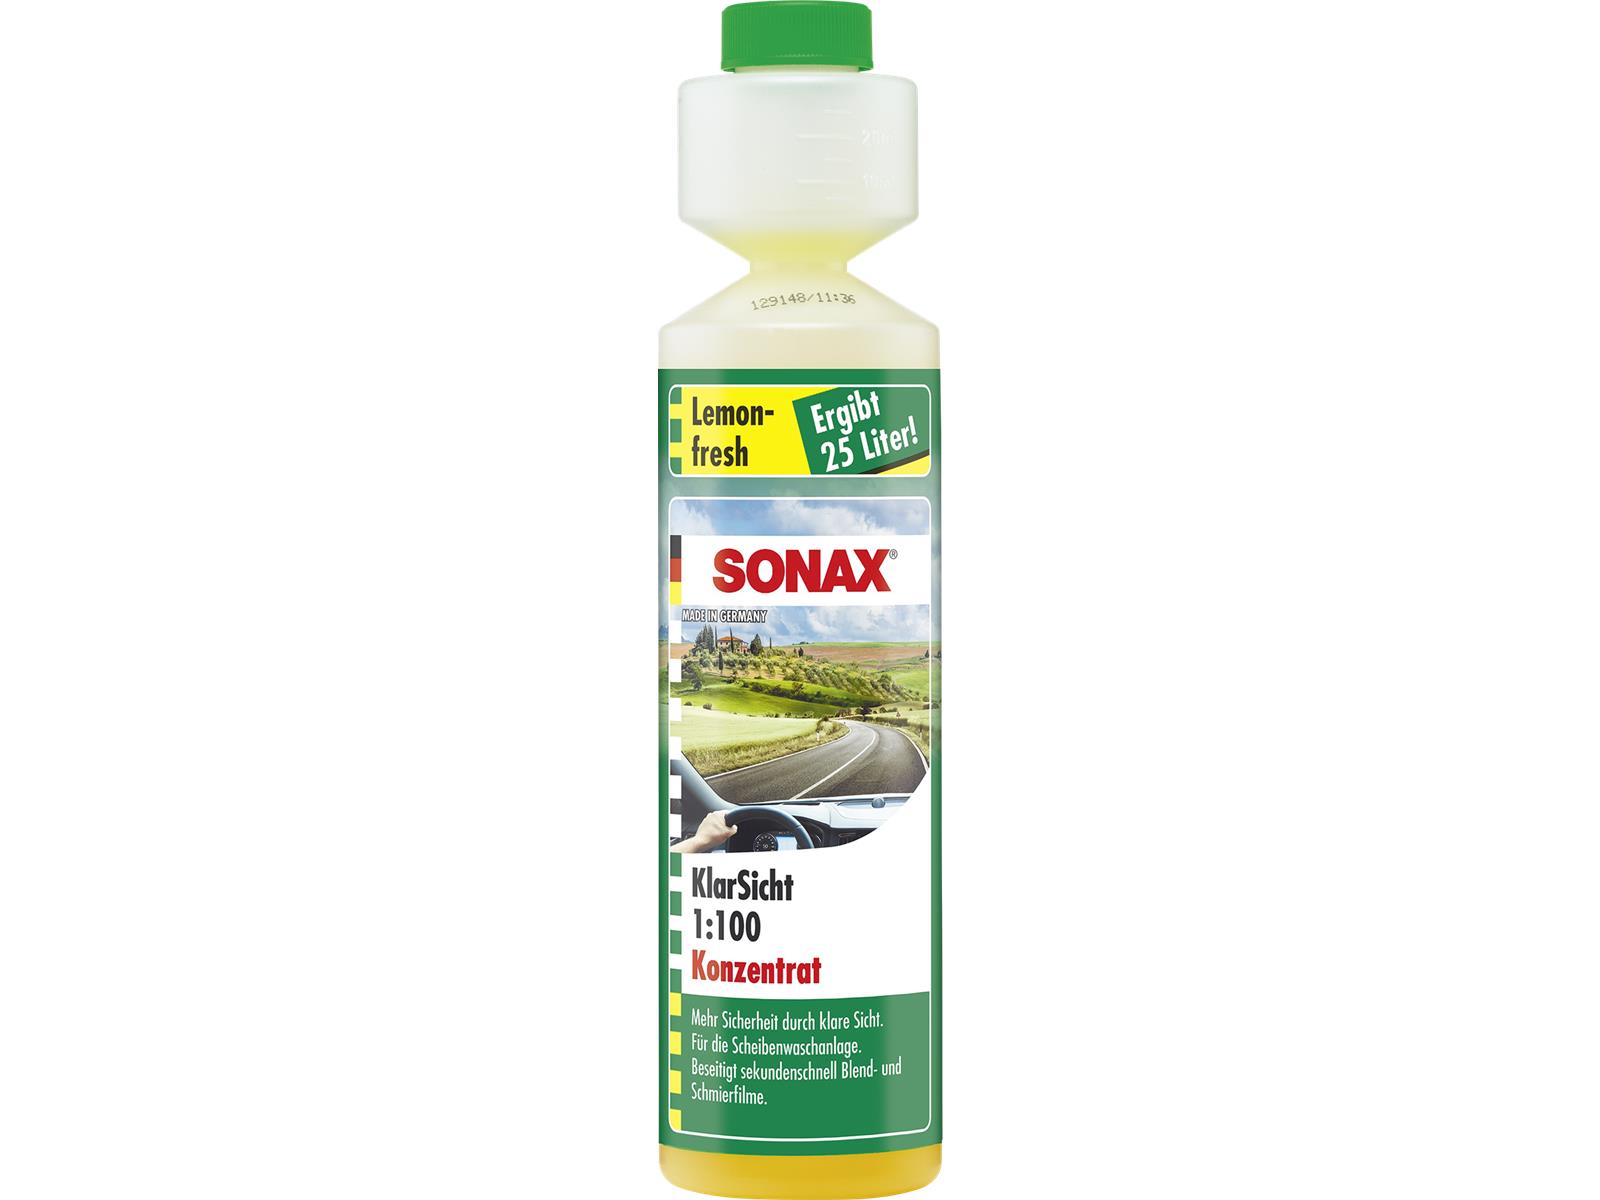 SONAX 03731410 KlarSicht 1:100 Konzentrat Lemon-fresh 250 ml